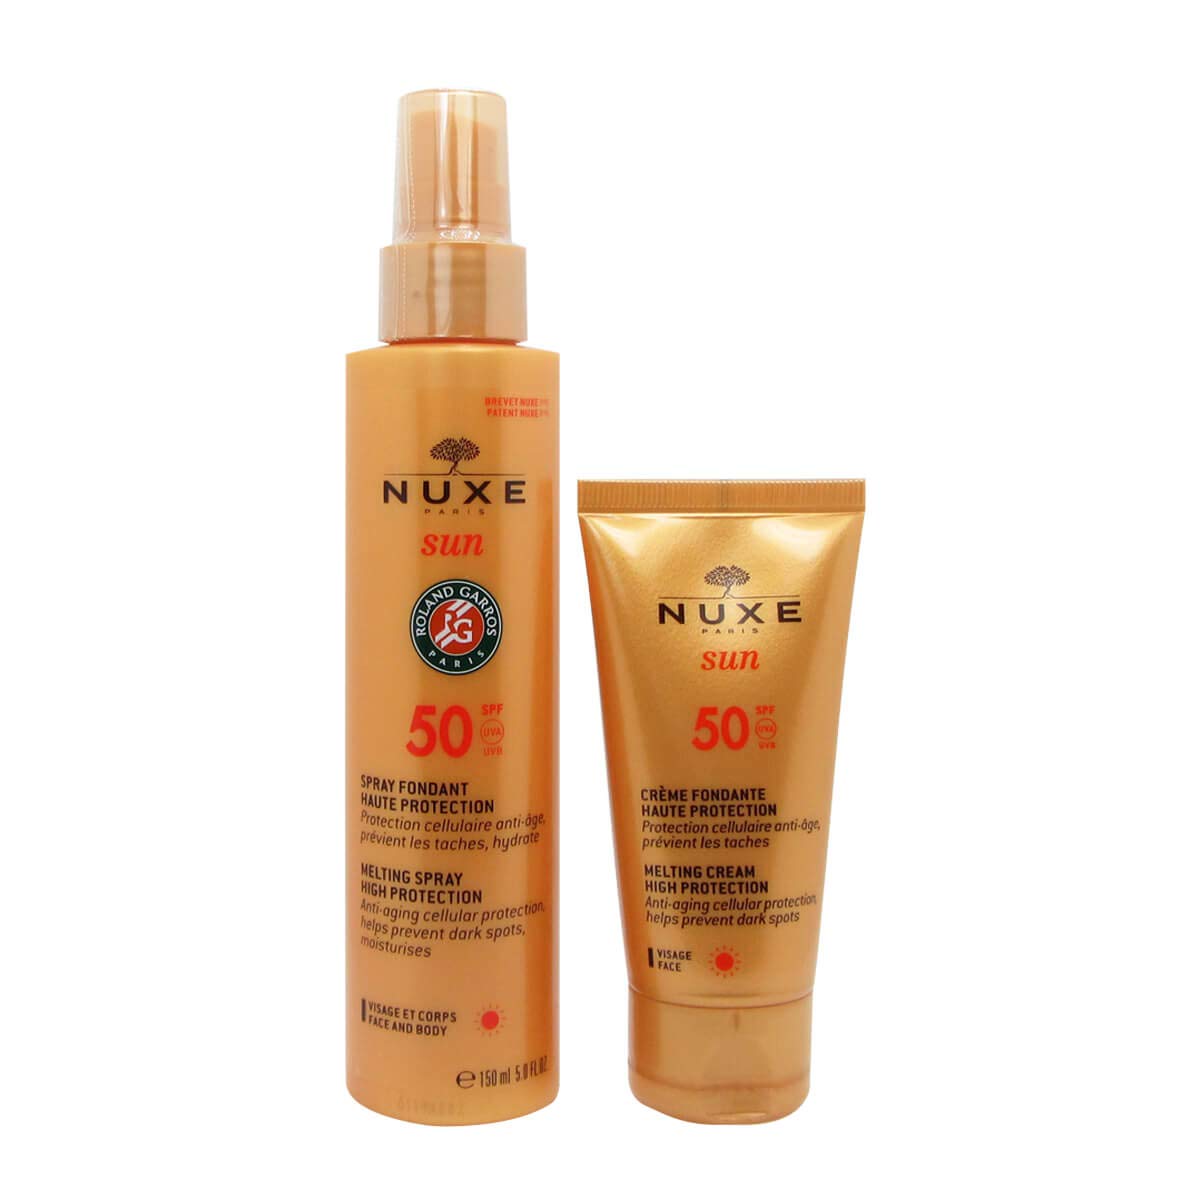 Nuxe Gift Set Spray Fondant Haute Protection SPF 50 150 ml + Cream Fondant Haute Protection SPF 50